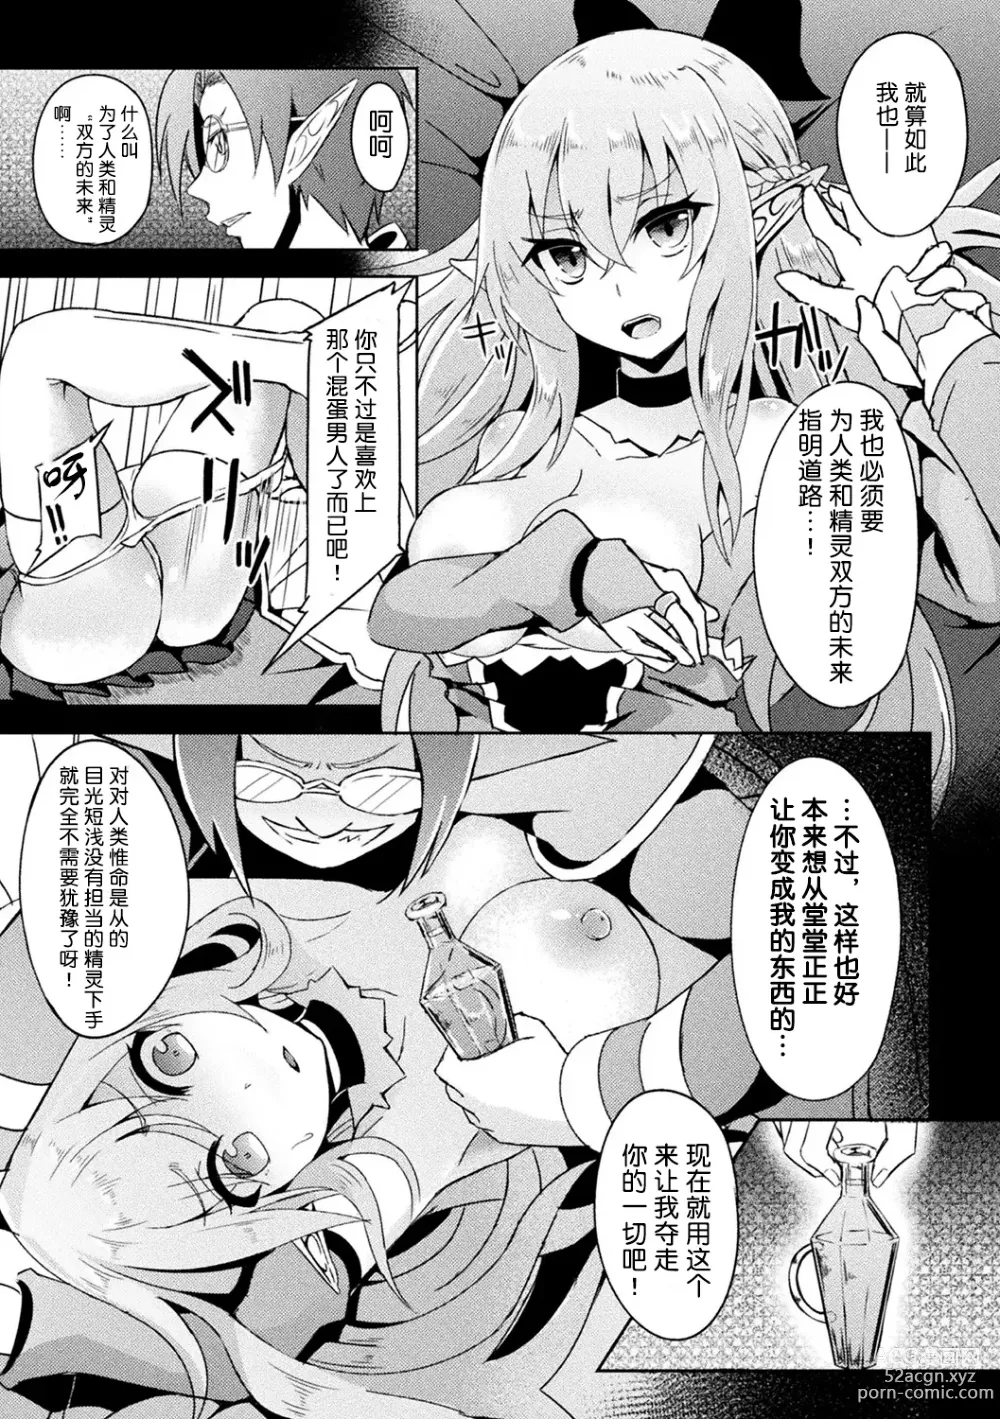 Page 5 of manga 精靈族良家公主殿下薬漬け公開陵辱